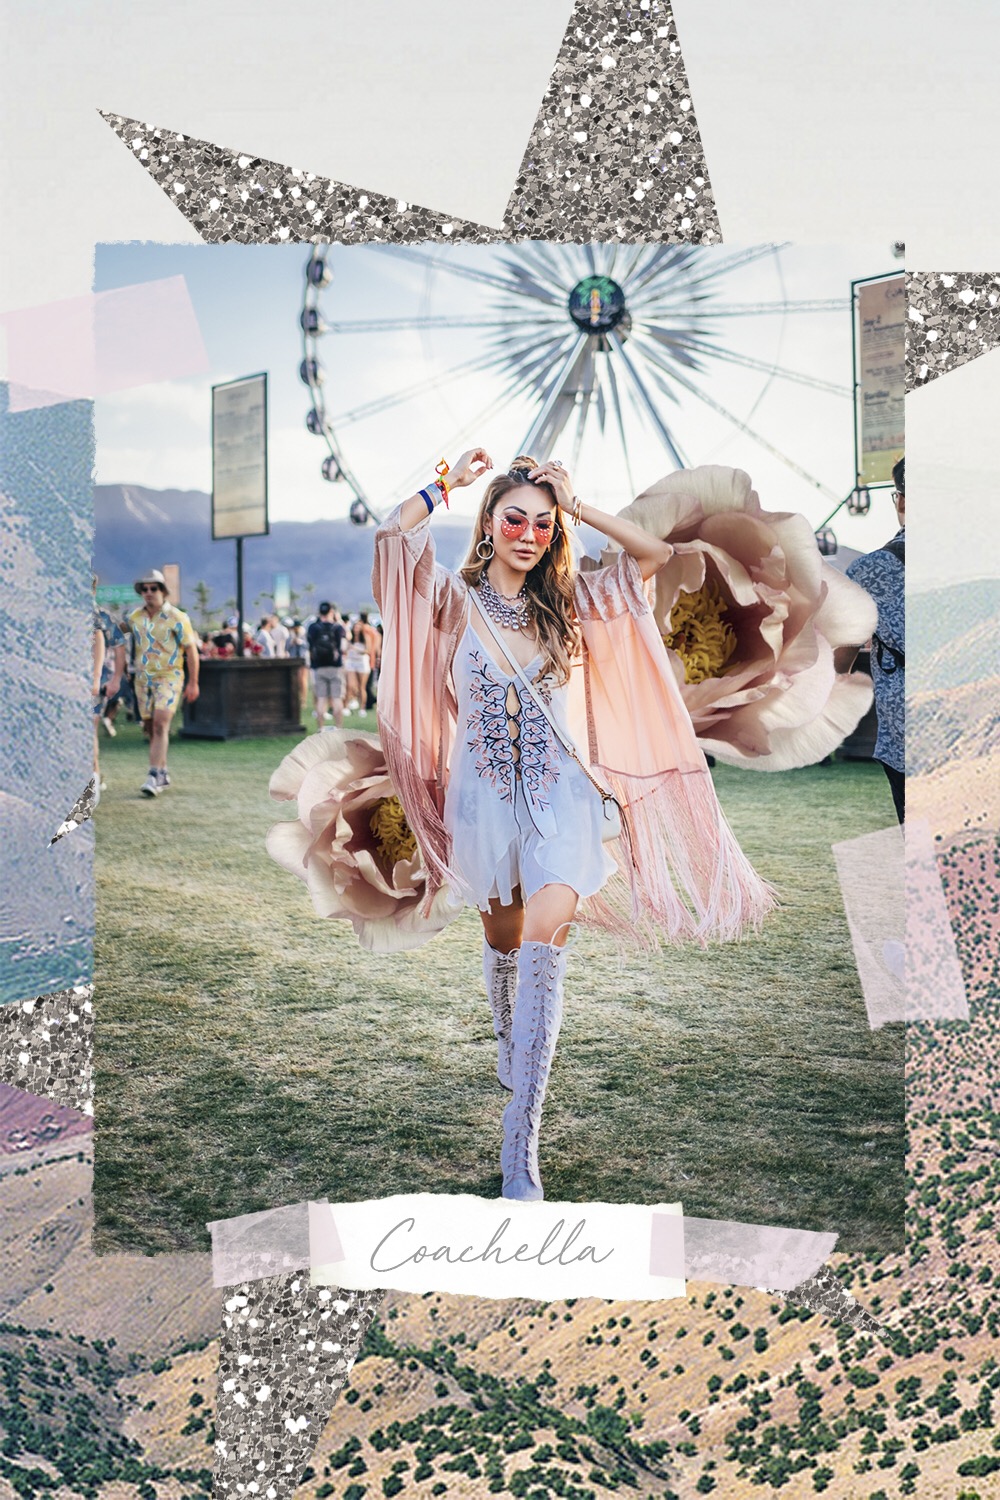 Cool Coachella Outfit Ideas - Coachella Collage, Fringe Kimono, Embroidered Dress // Notjessfashion.com